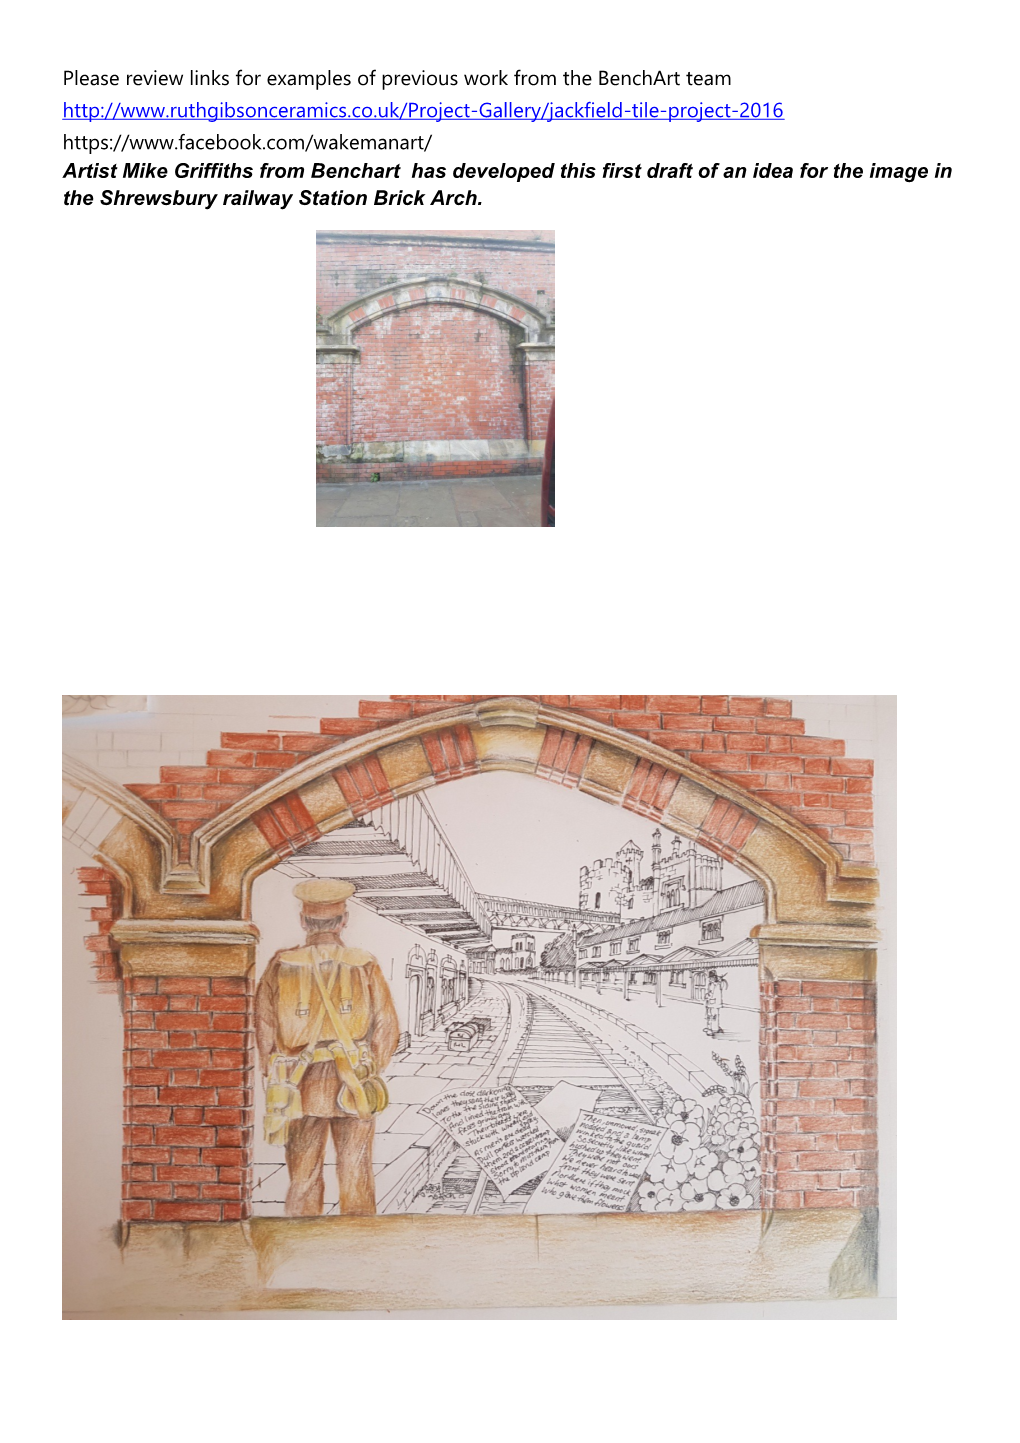 A Tile Mural for Shrewsbury Railway Station